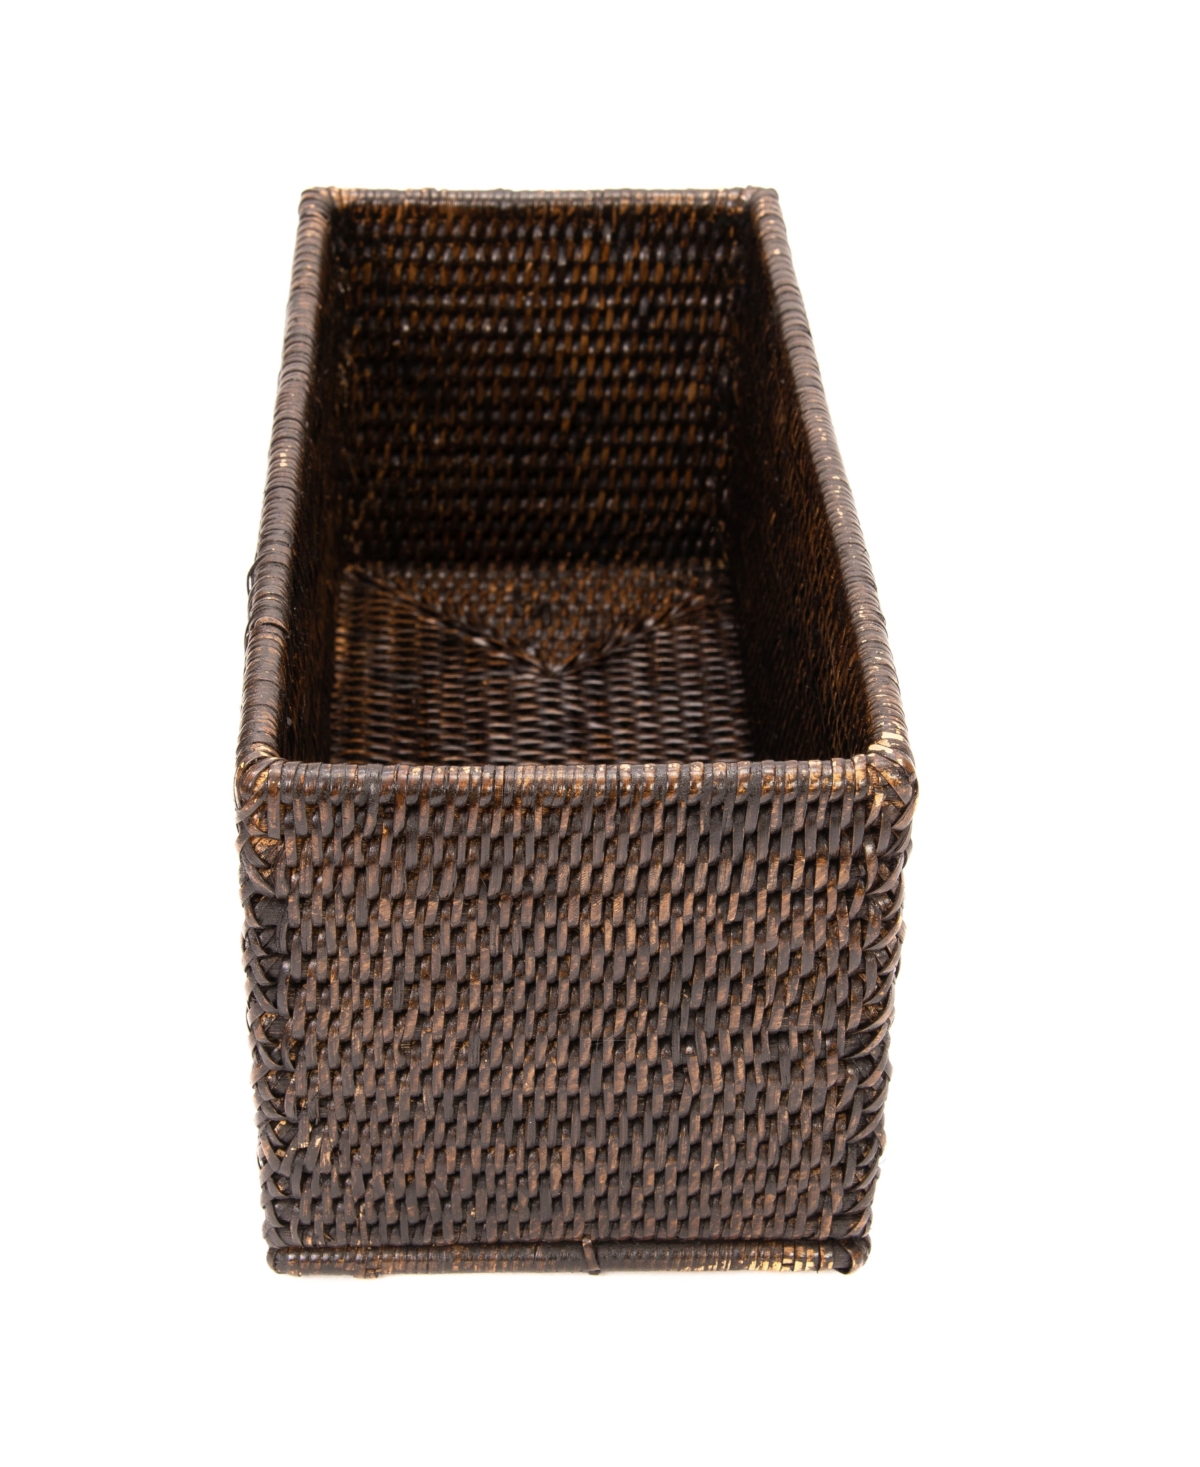 Shop Artifacts Trading Company Artifacts Rattan Rectangular Basket In Coffee Bean